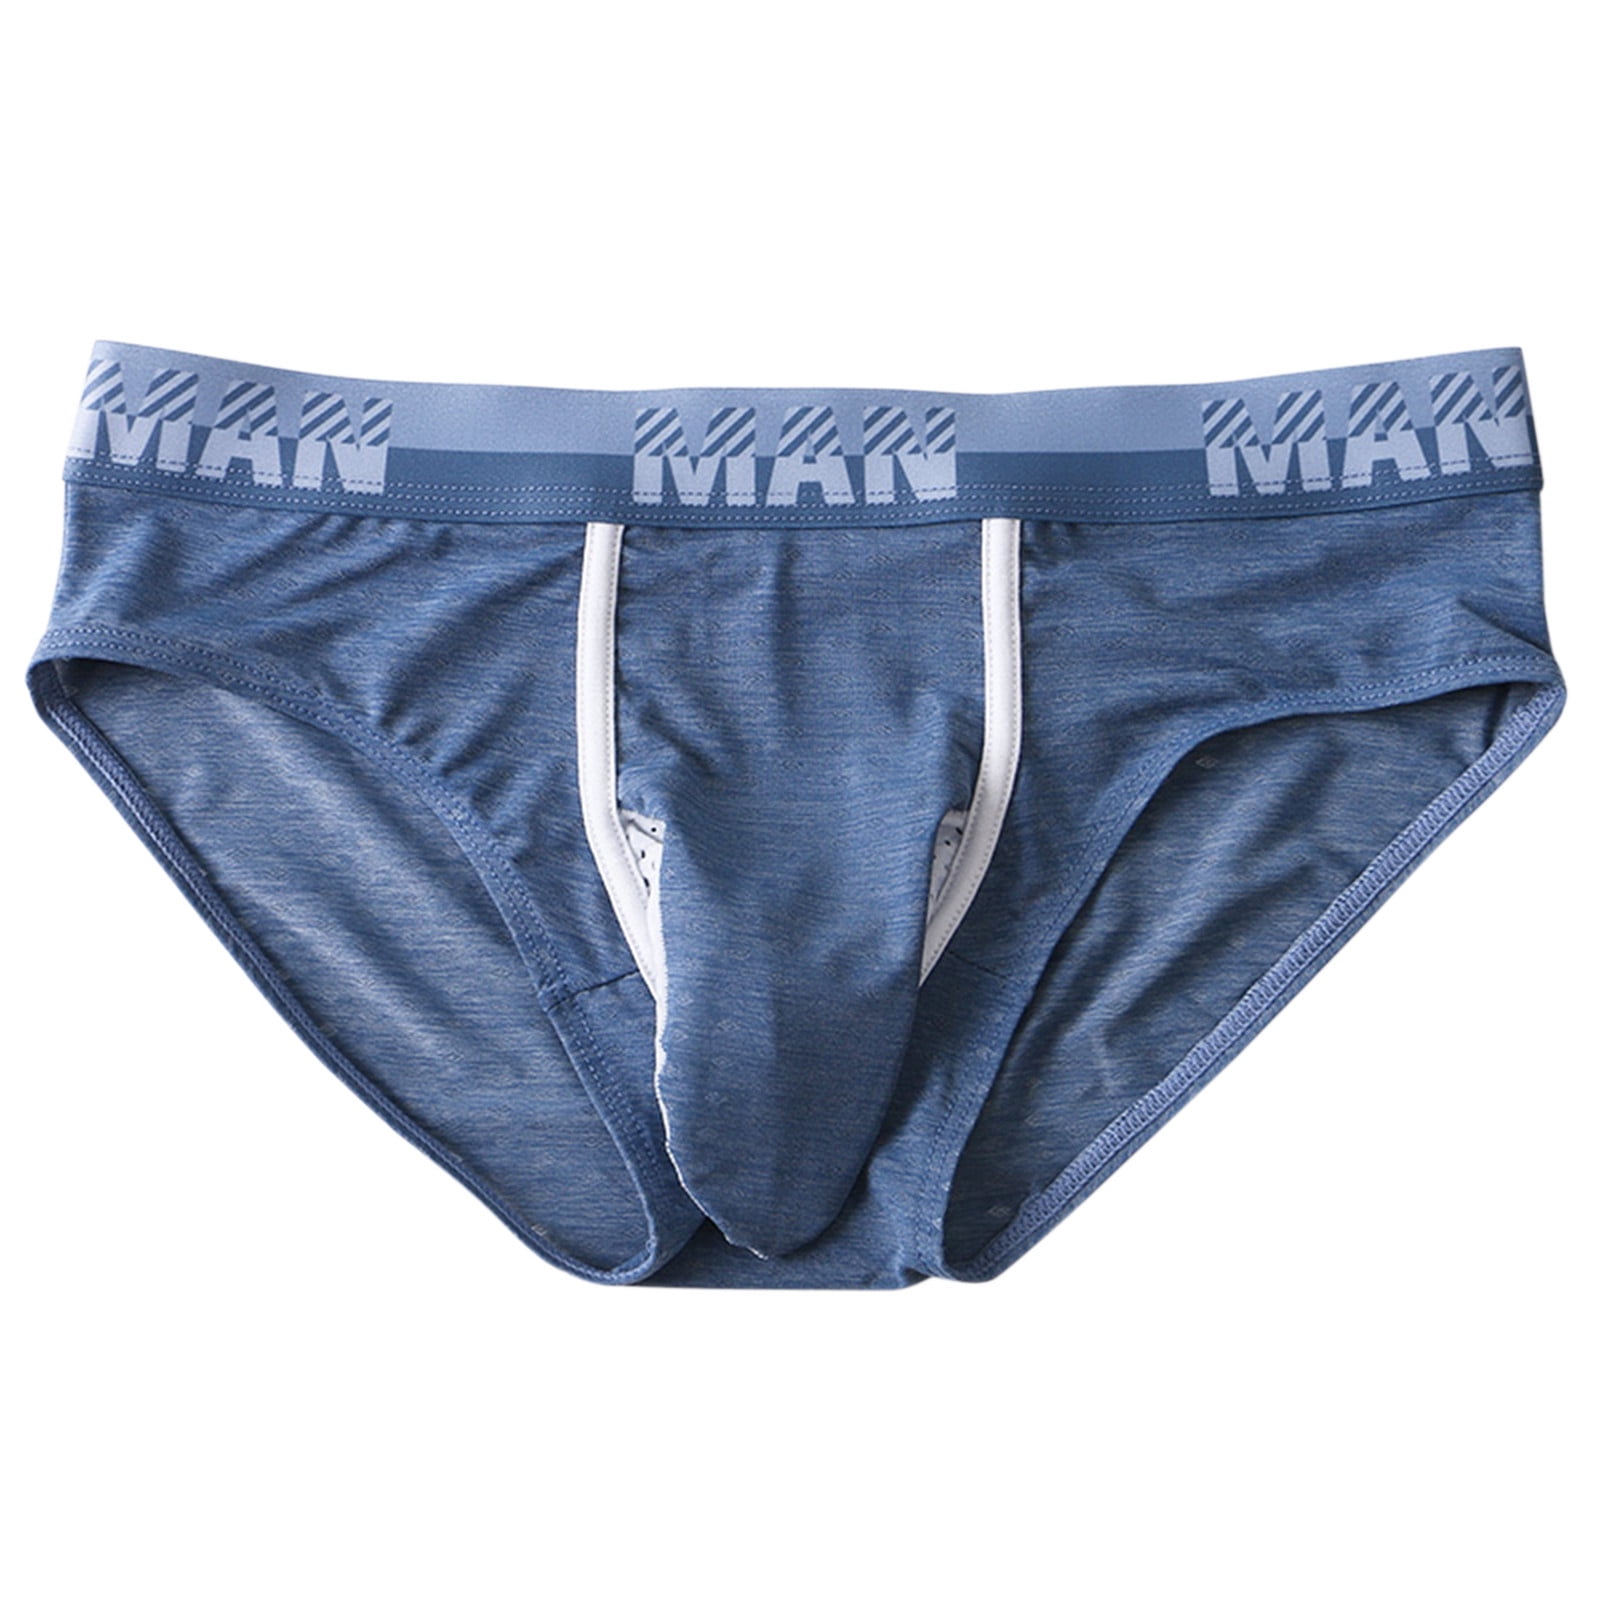 zuwimk Mens Briefs,Men's Dual Pouch Underwear Classic Fit Comfy Soft Cotton  Briefs Blue,M 